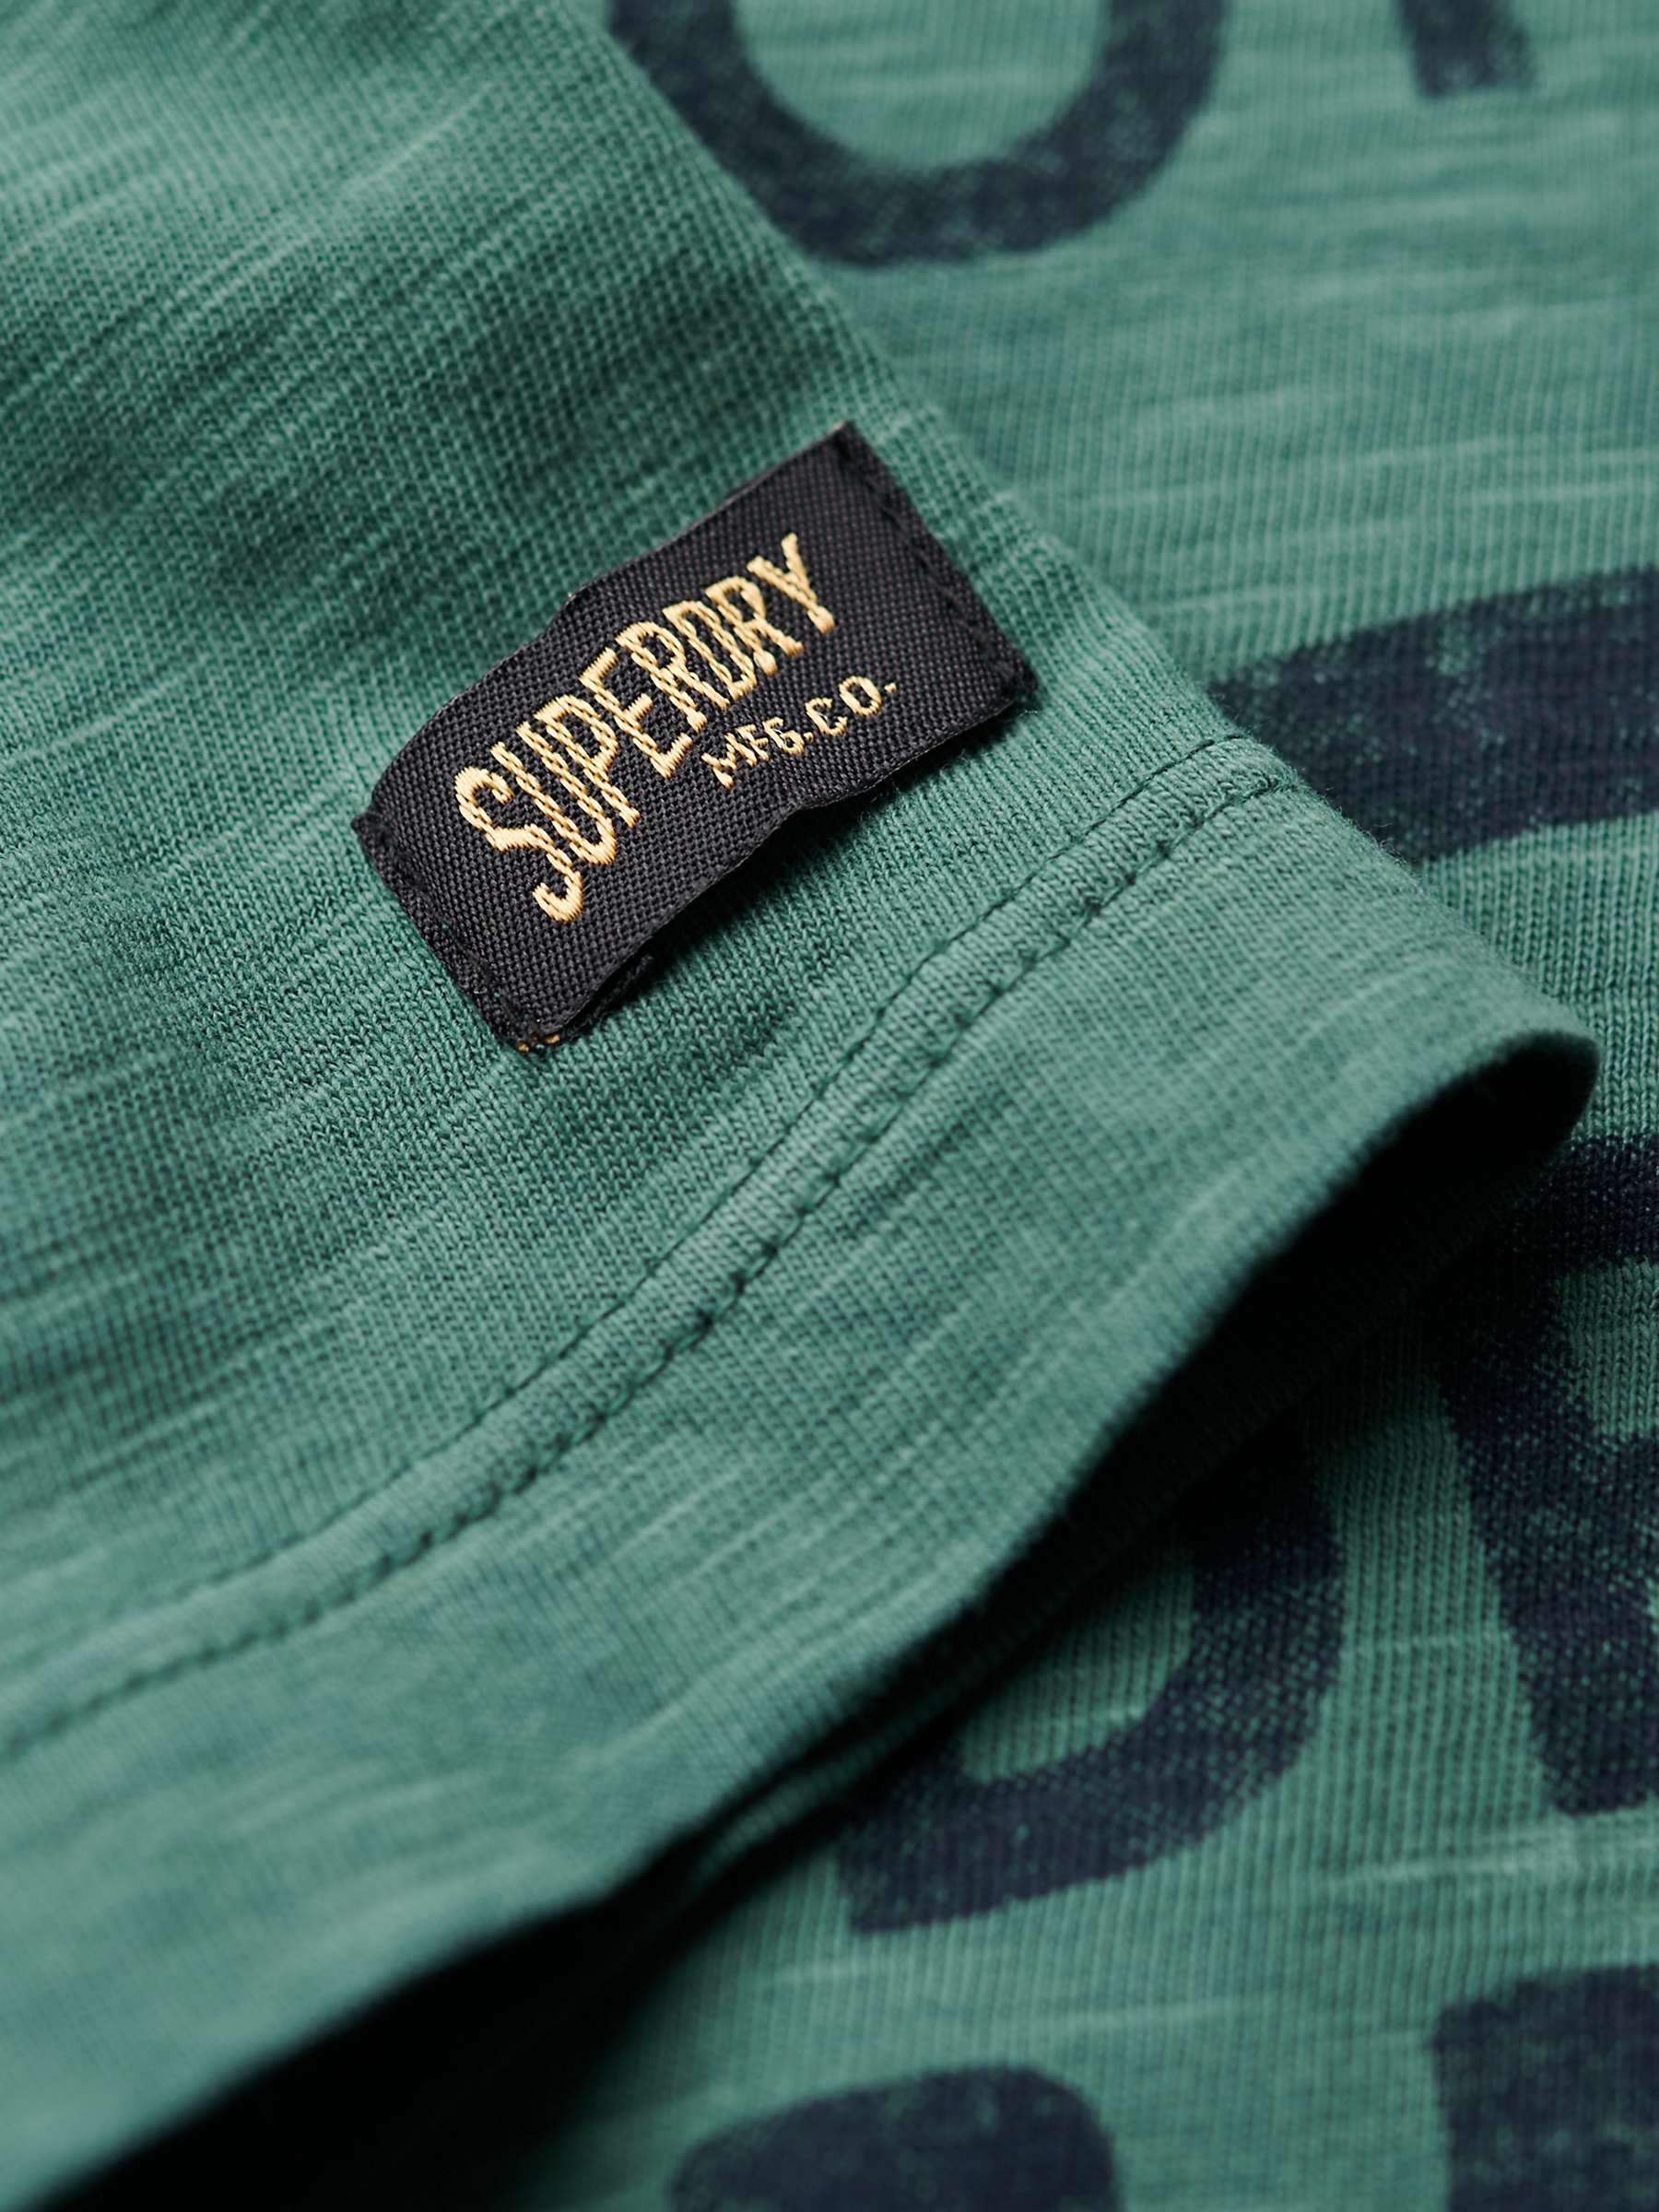 Buy Superdry Copper Label Script T-Shirt Online at johnlewis.com